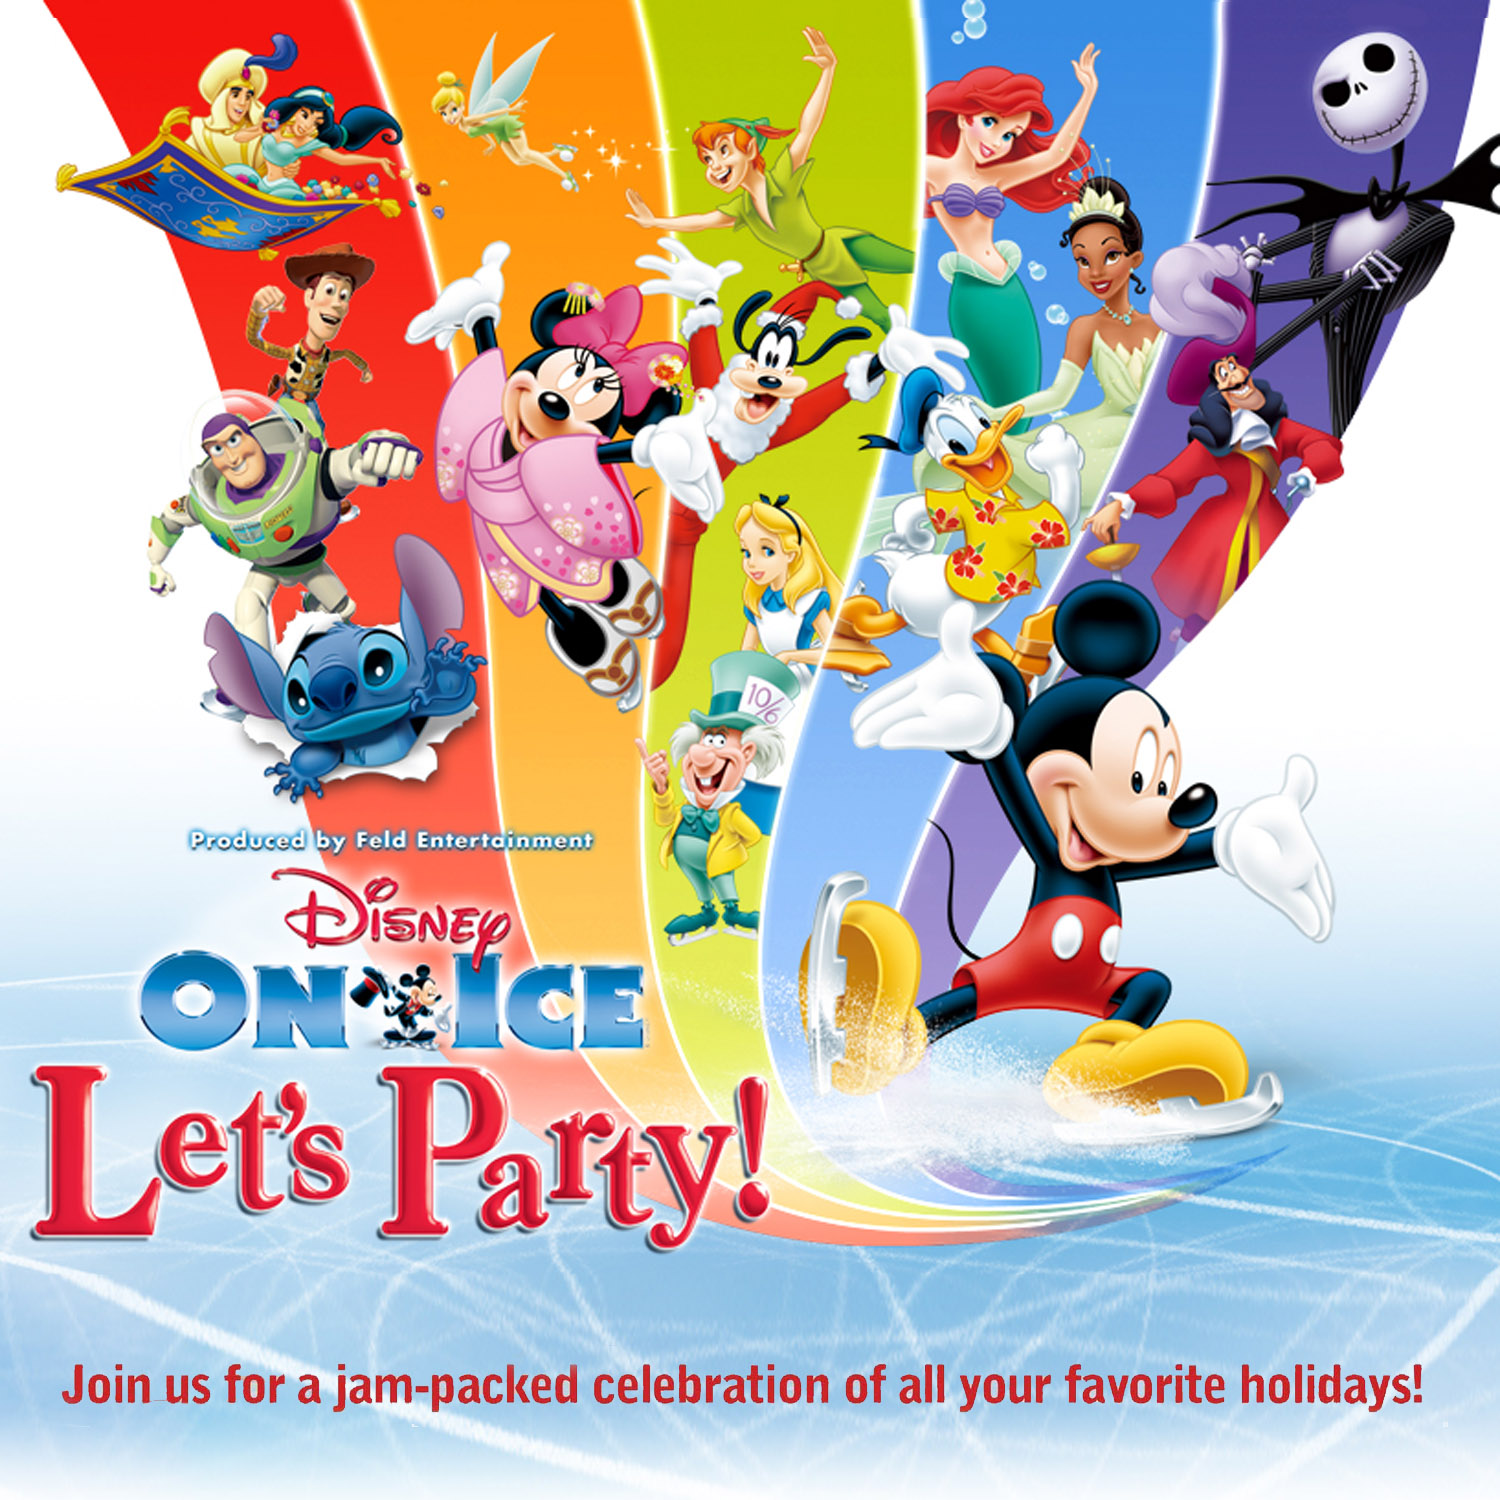 http://1.bp.blogspot.com/-s3oa-NshZrc/USnmXvP-OWI/AAAAAAAABwM/SJ9-6xjpzBk/s1600/Disney+On+Ice+Lets+Party+Lets+Celebrate+Mickey+Mouse+Minnie+Mouse+Donald+Duck+Buzz+Lightyear+Woody+Ariel+Jack+Skeleton+Peter+Pan+Tinkerbell.jpg